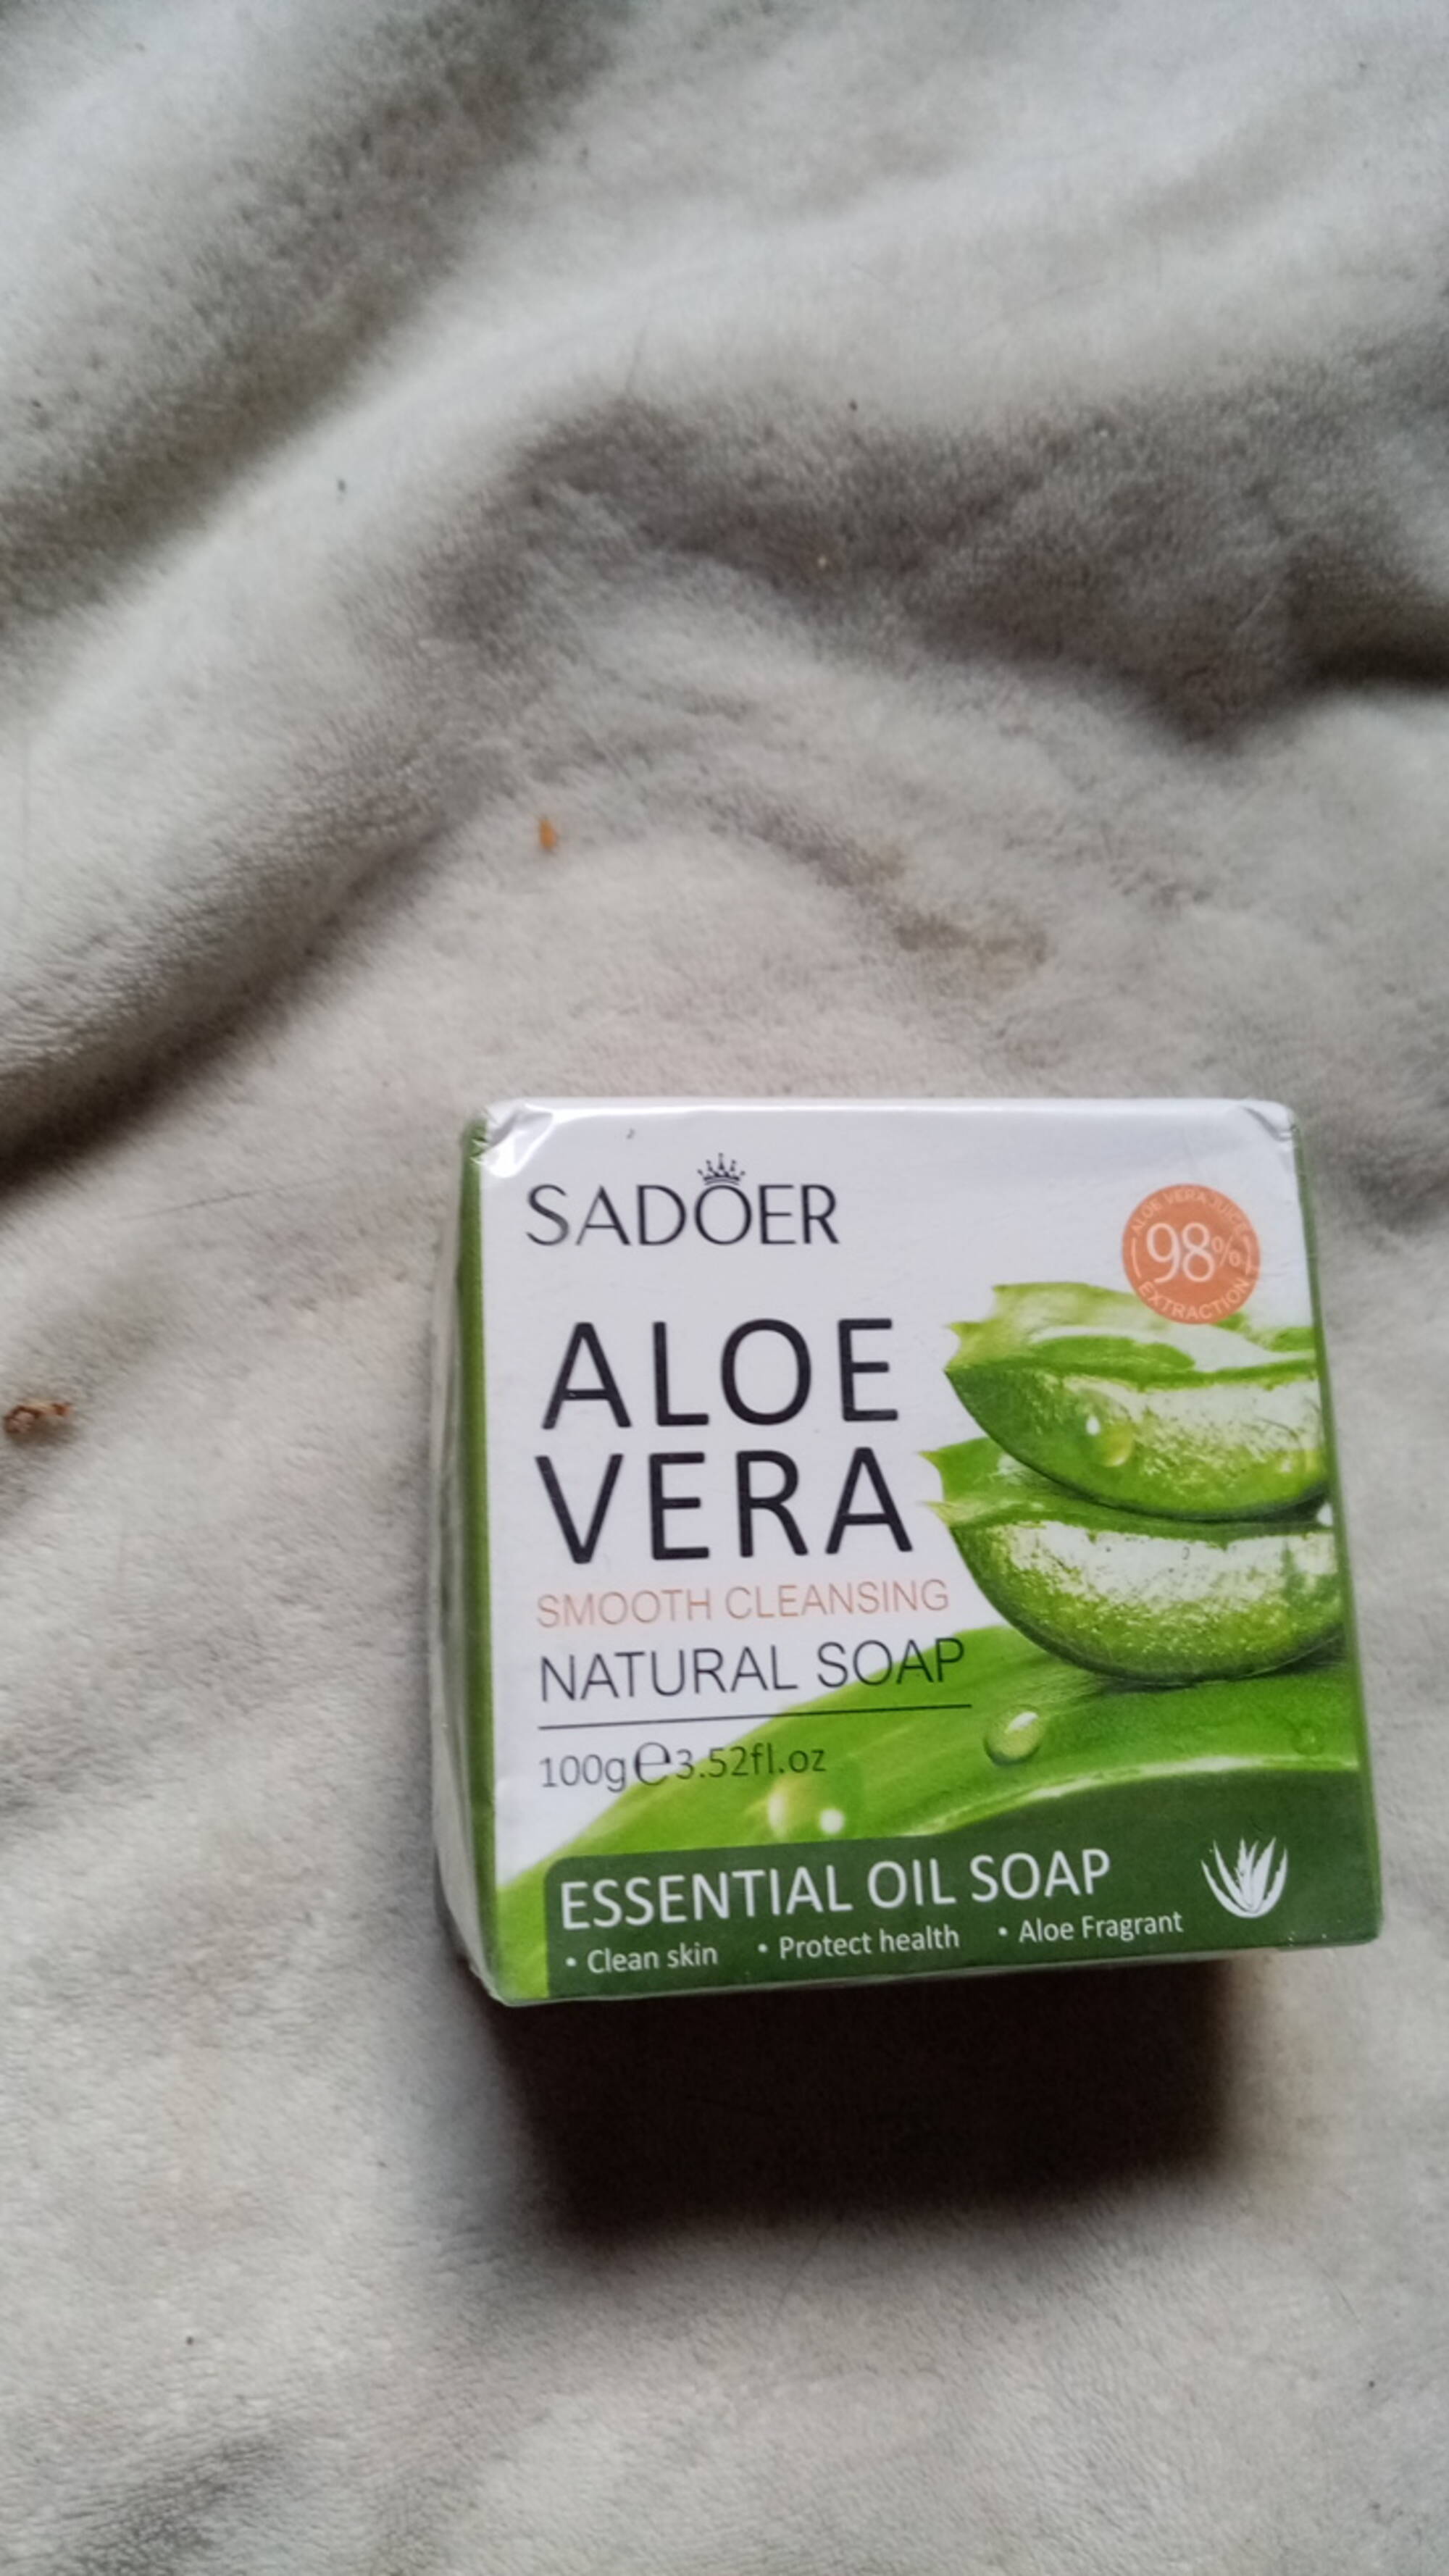 SADOER - Aloe vera - Natural soap